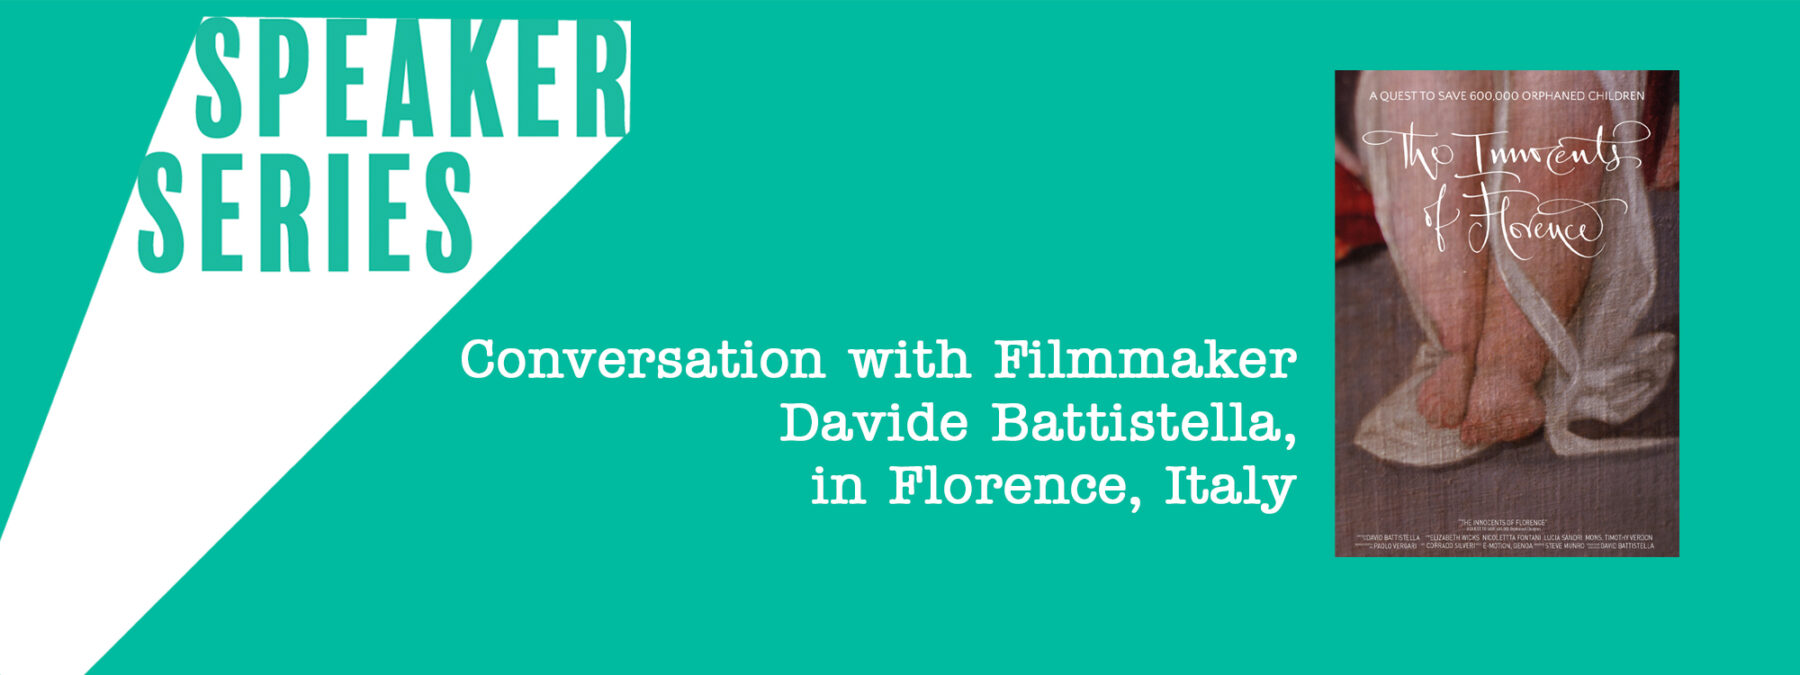 Speaker Series with Davide Battistella